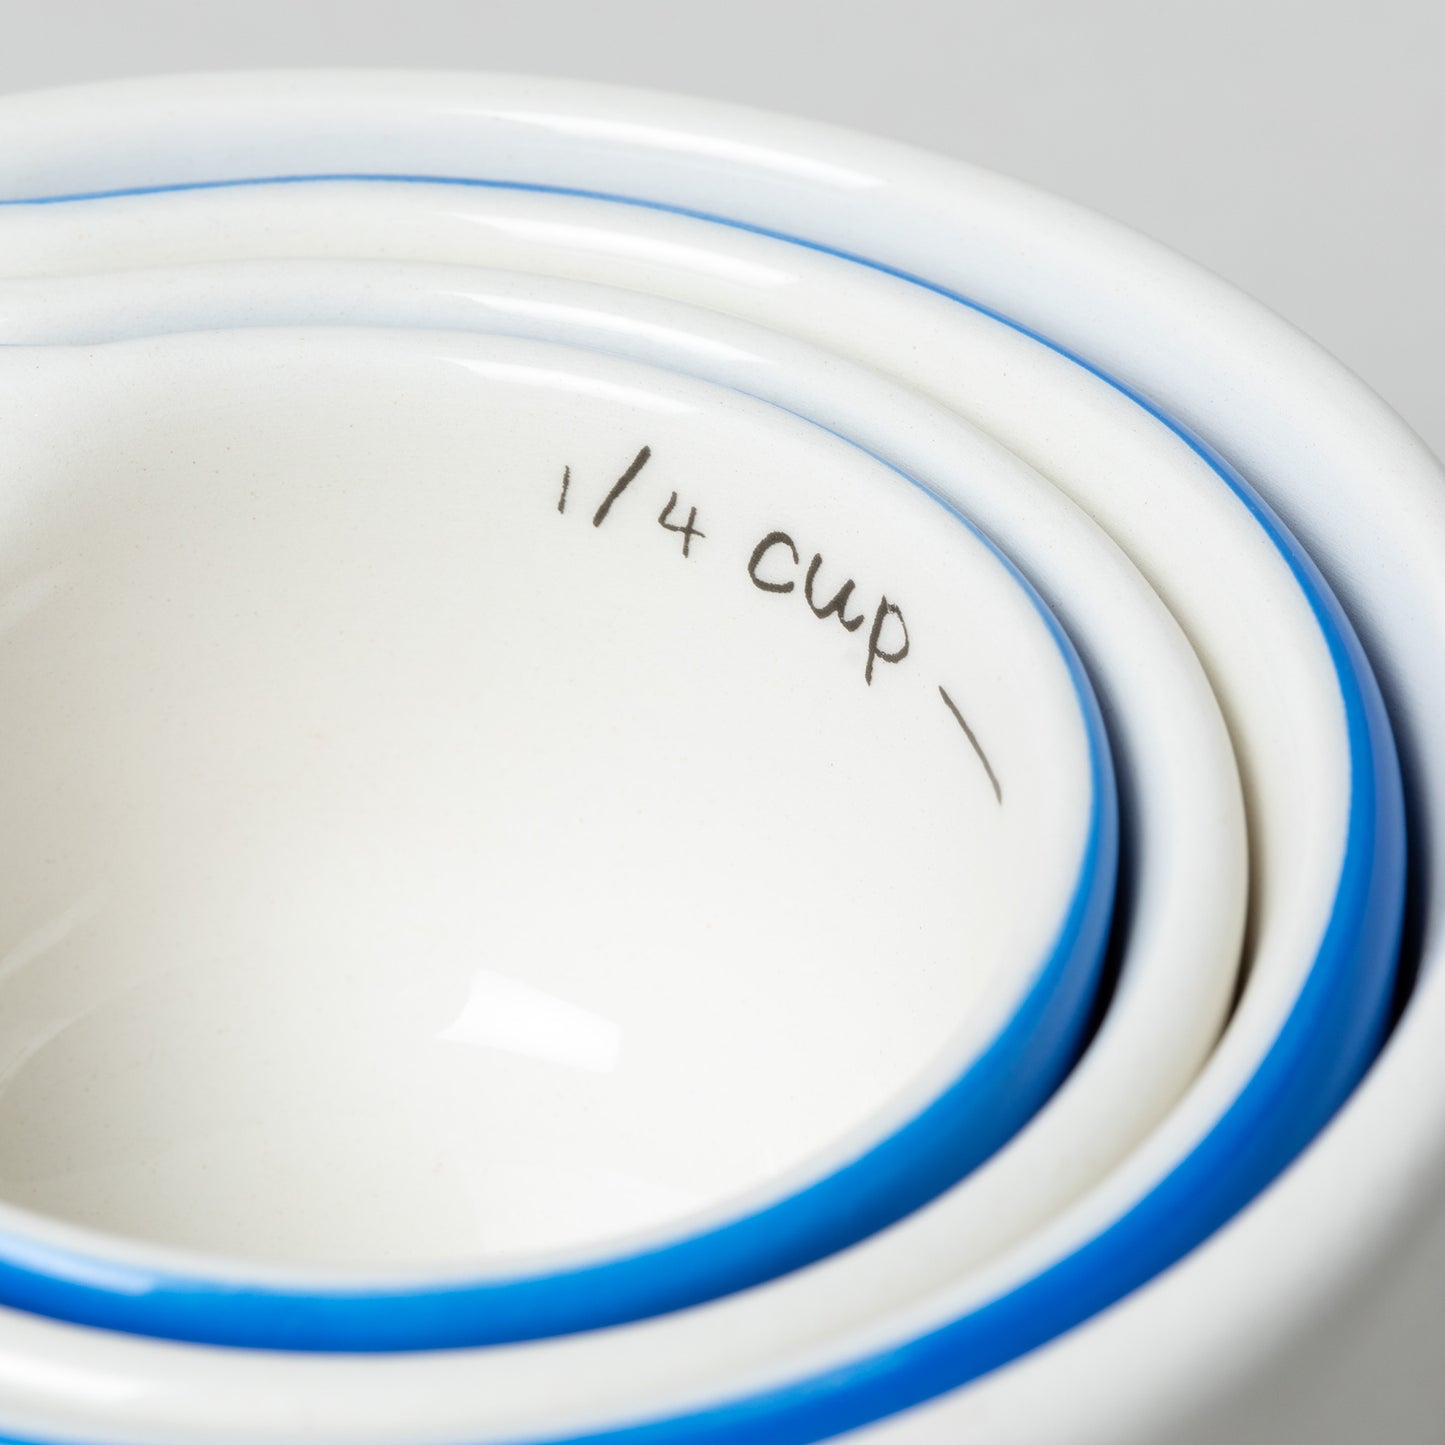 Paw Prints Ceramic Measuring Cup Set